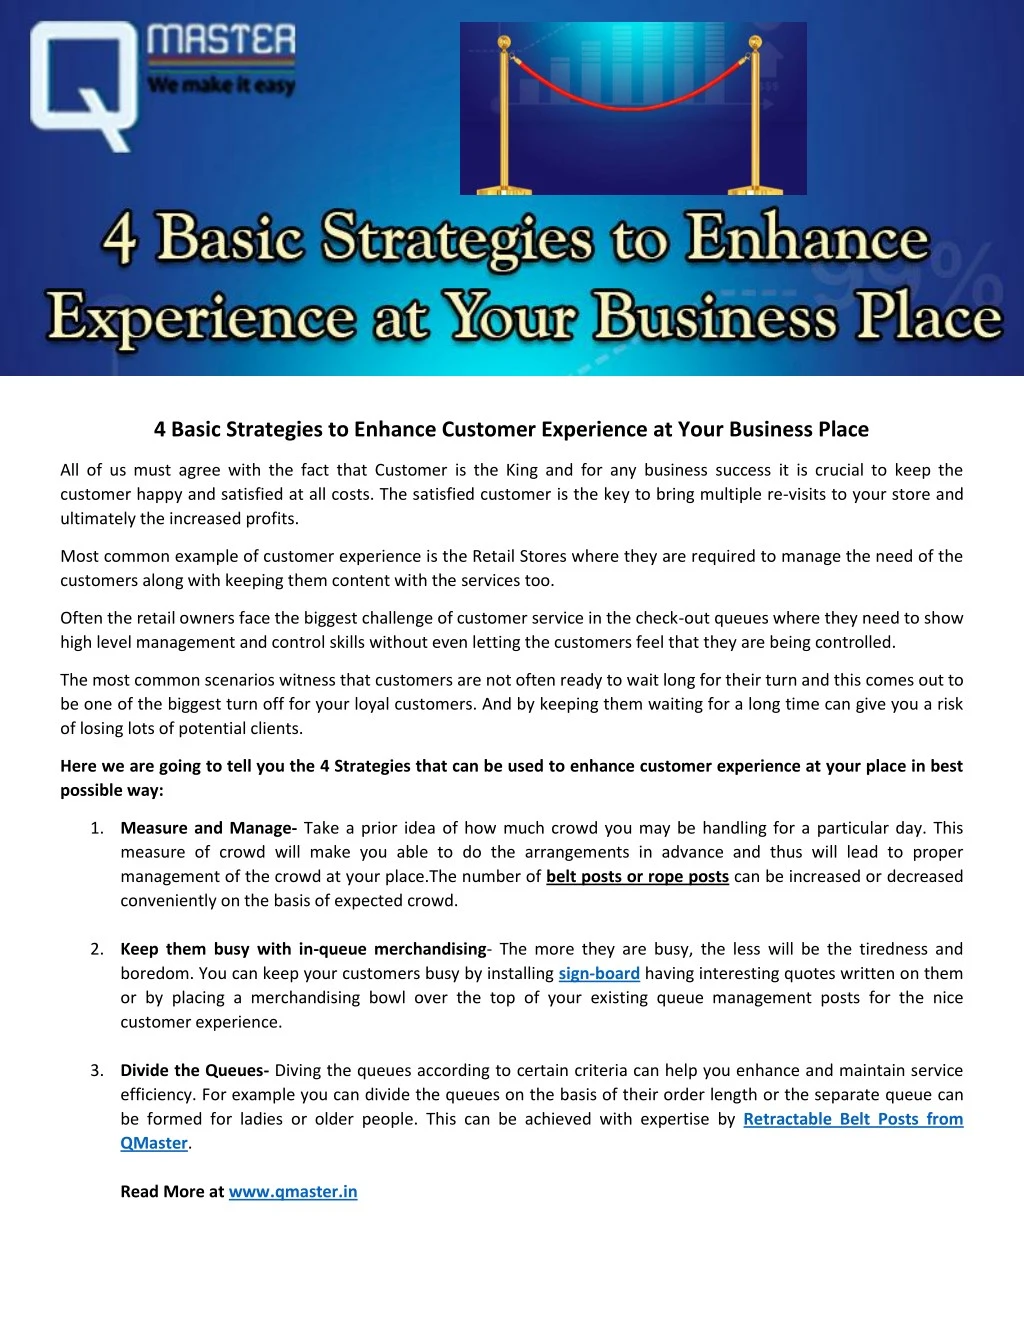 4 basic strategies to enhance customer experience